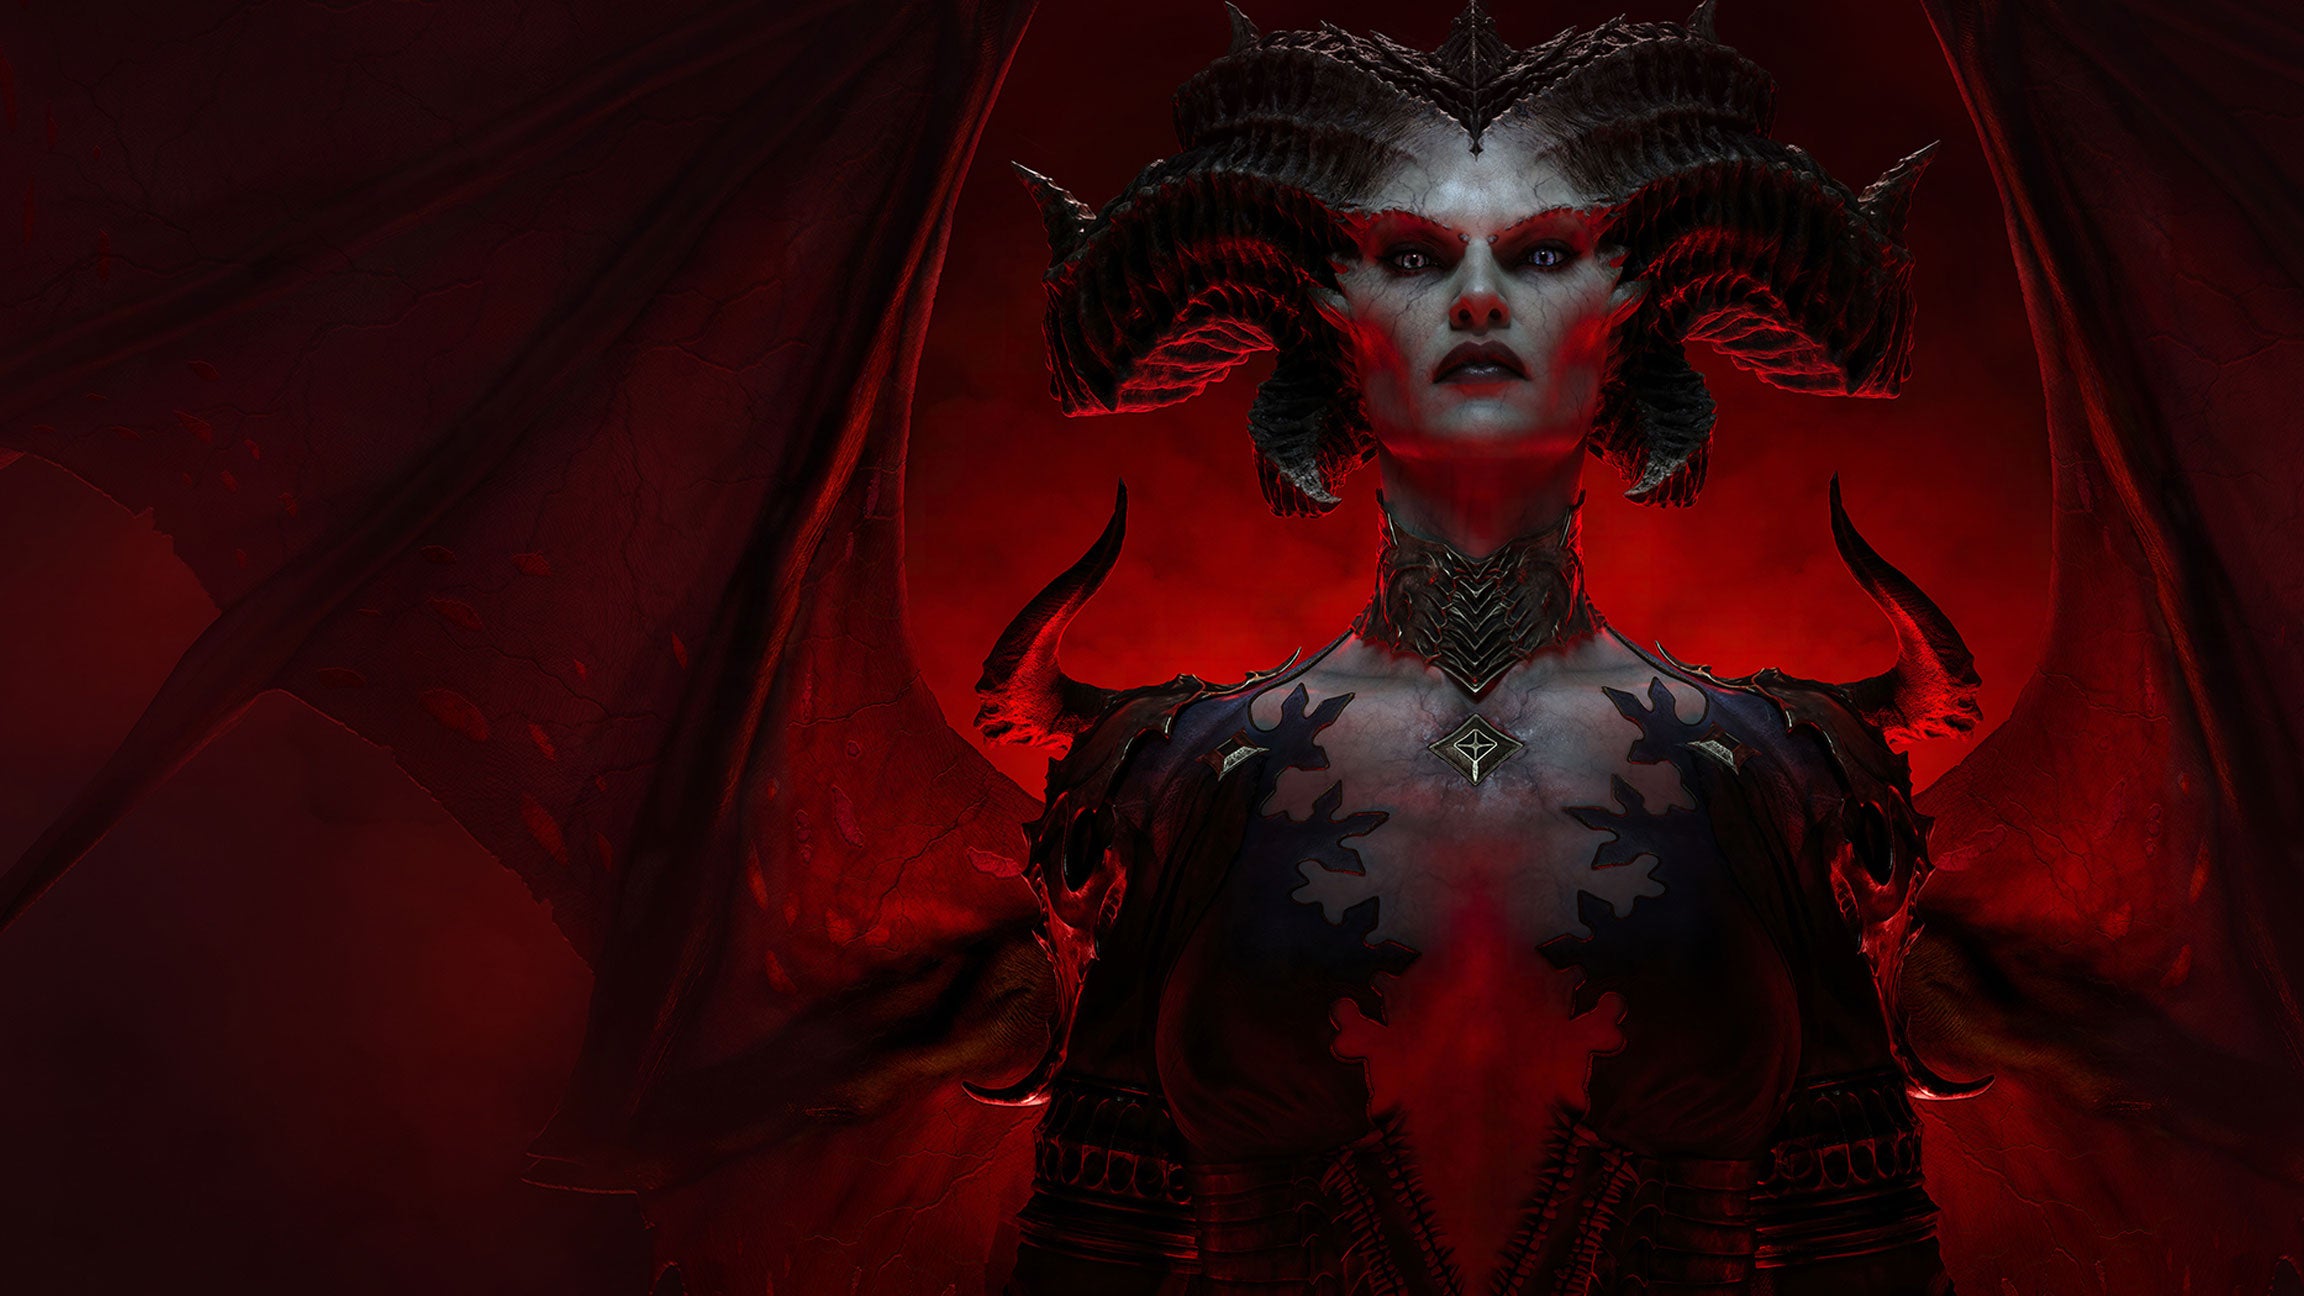 Artwork showing Diablo 4's demonic villain Lilith looking sinister.